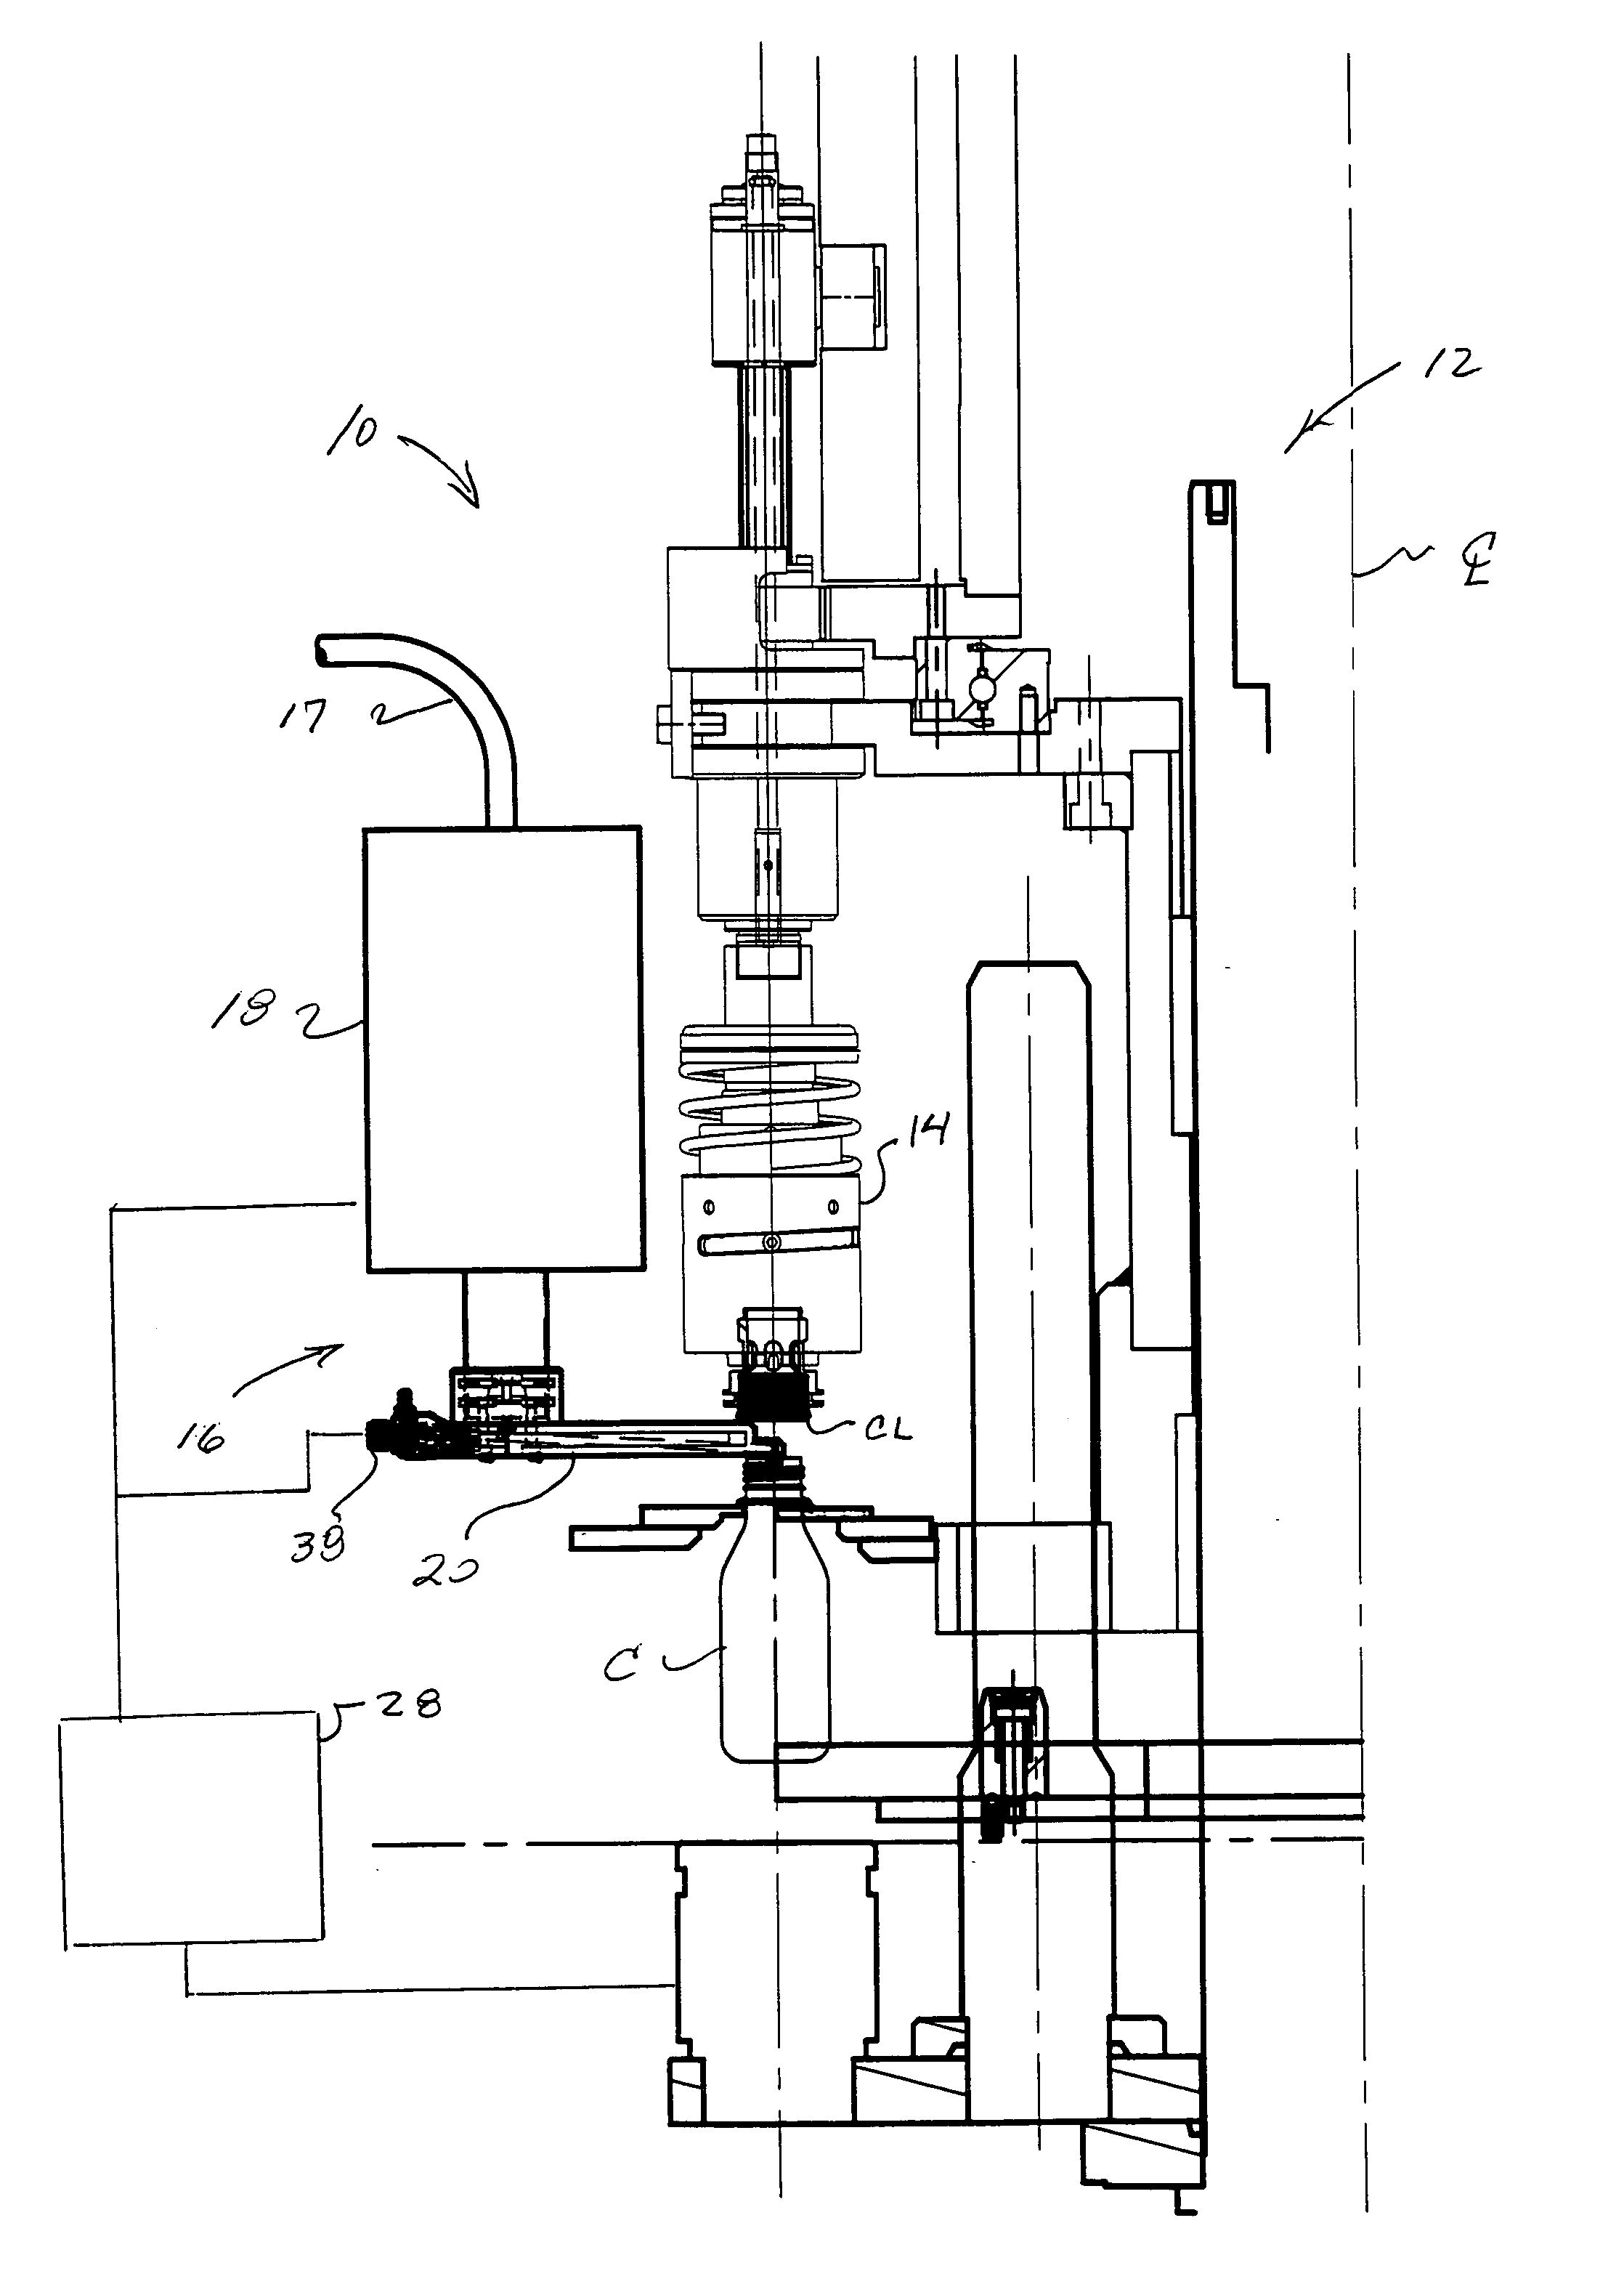 Capping and nitrogen dosing apparatus